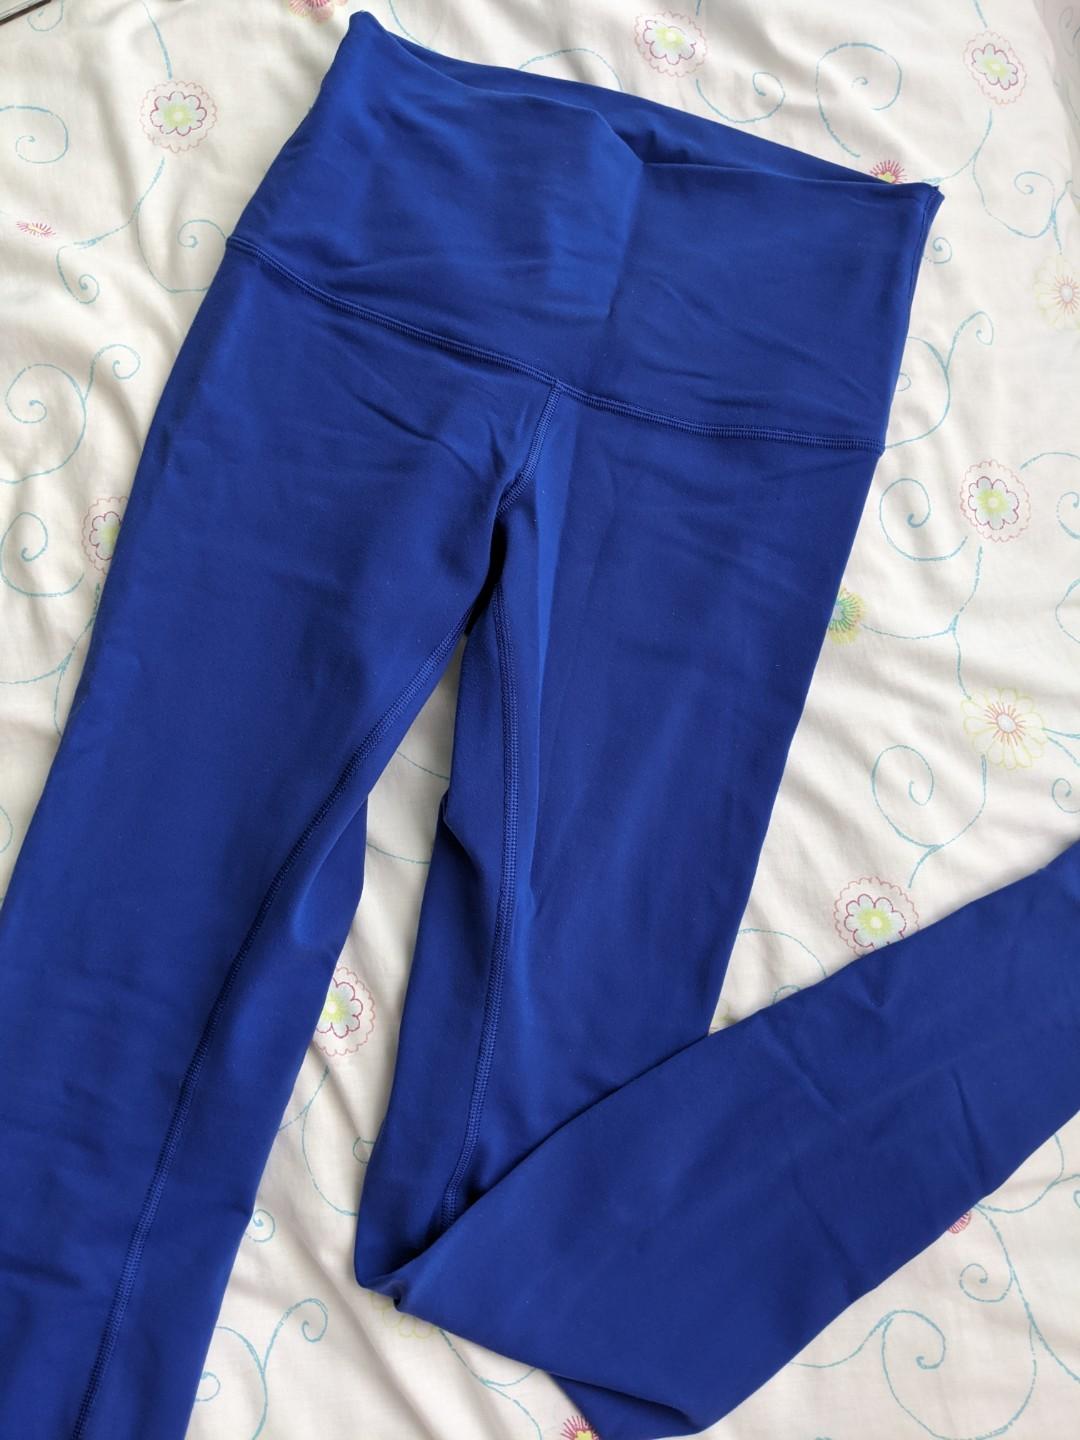 Lululemon Wunder Under HR blue leggings size 6